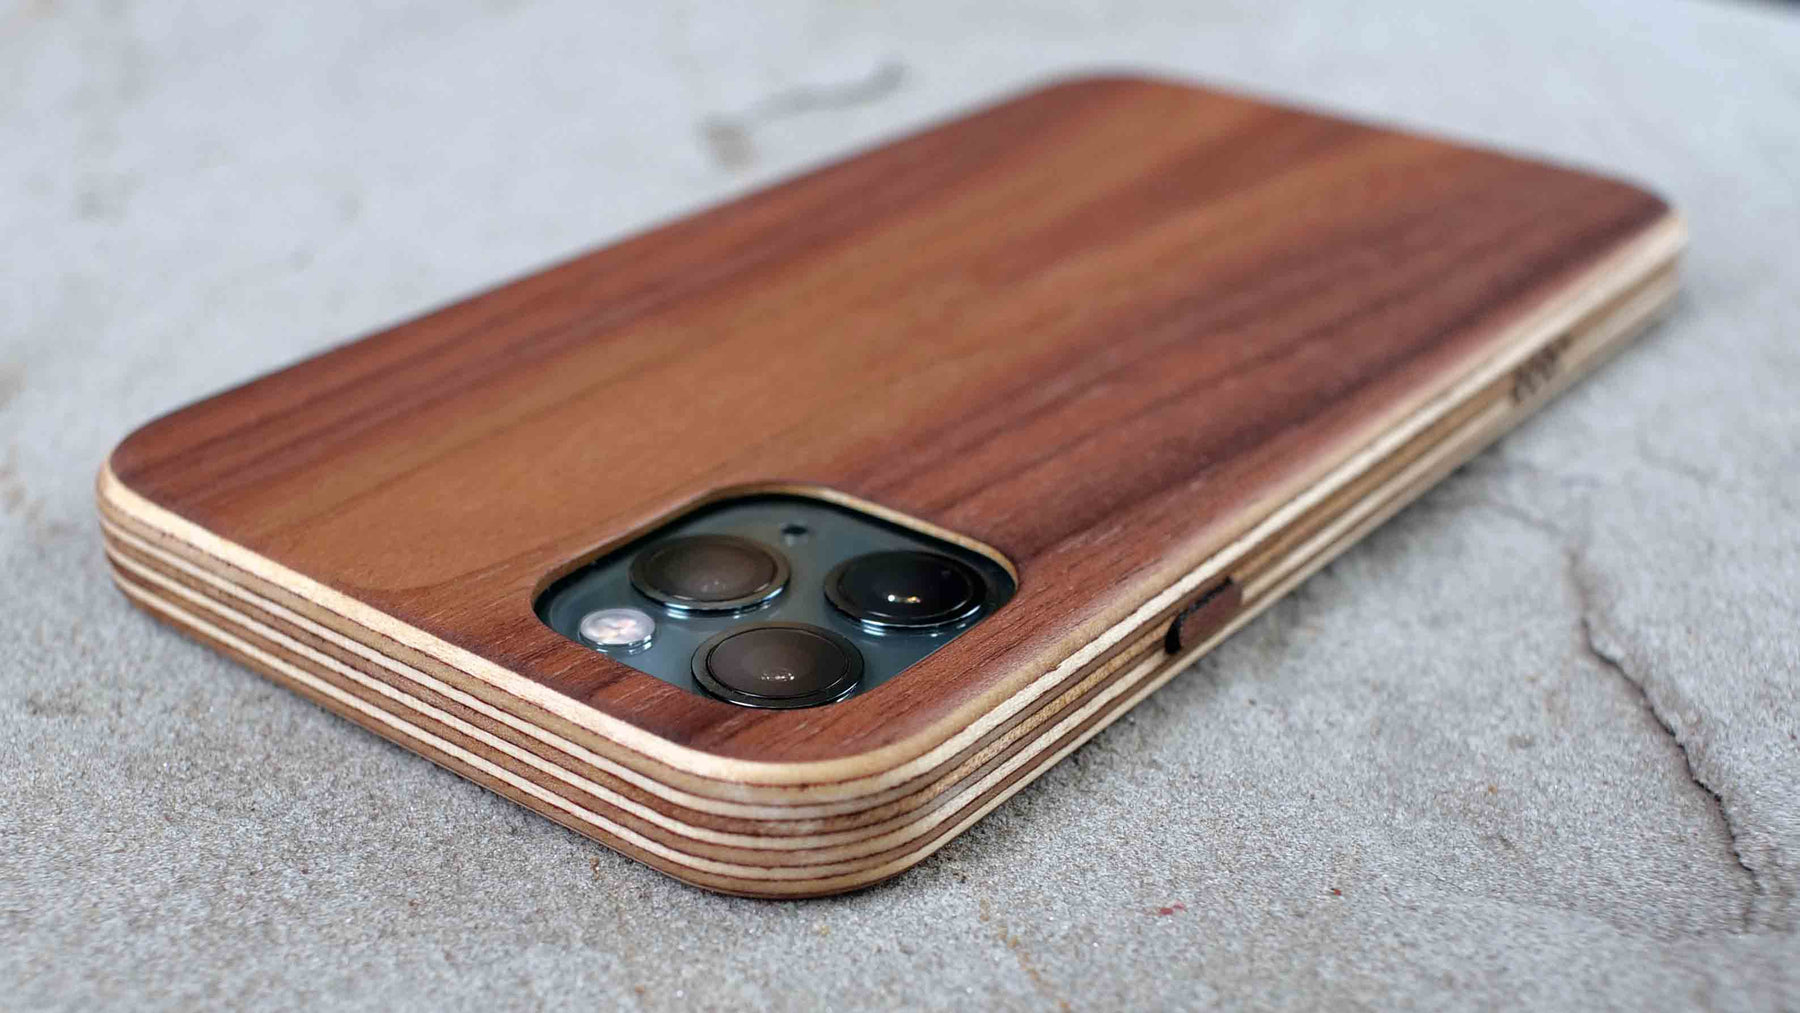 Plywood iPhone 15 Pro Max Case